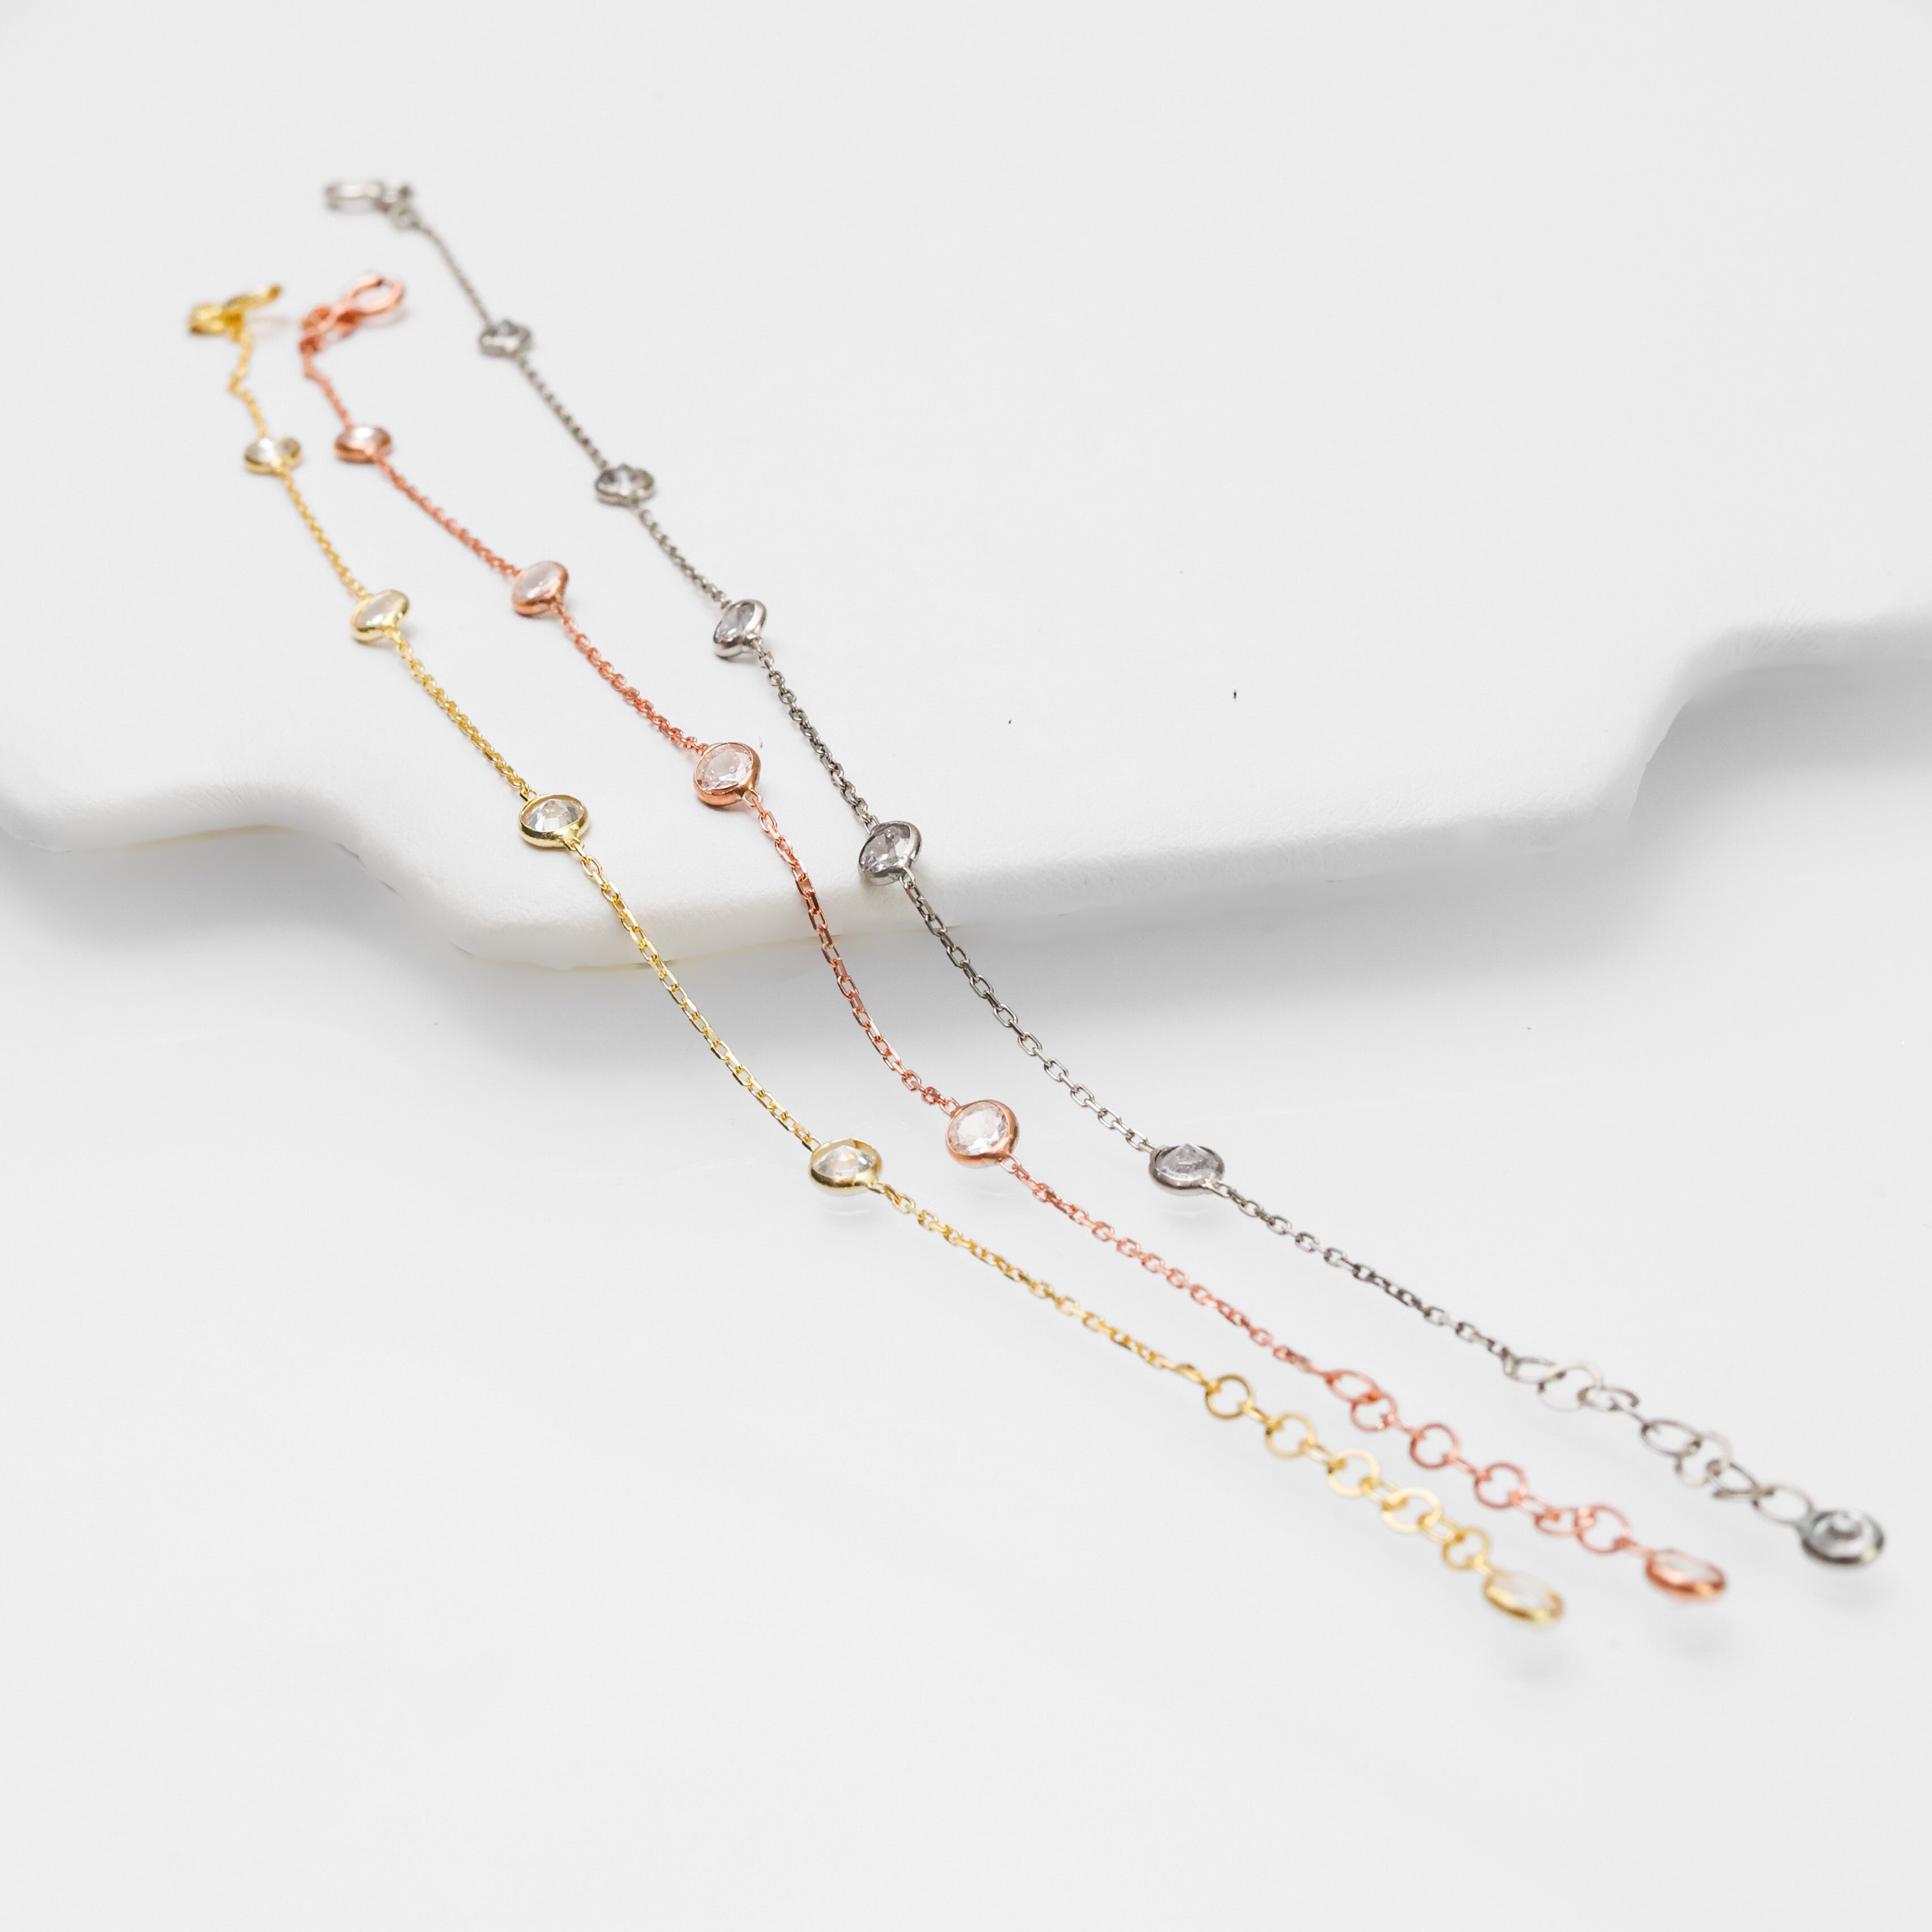 Crystal Rain bracelet - Gerekli Collection